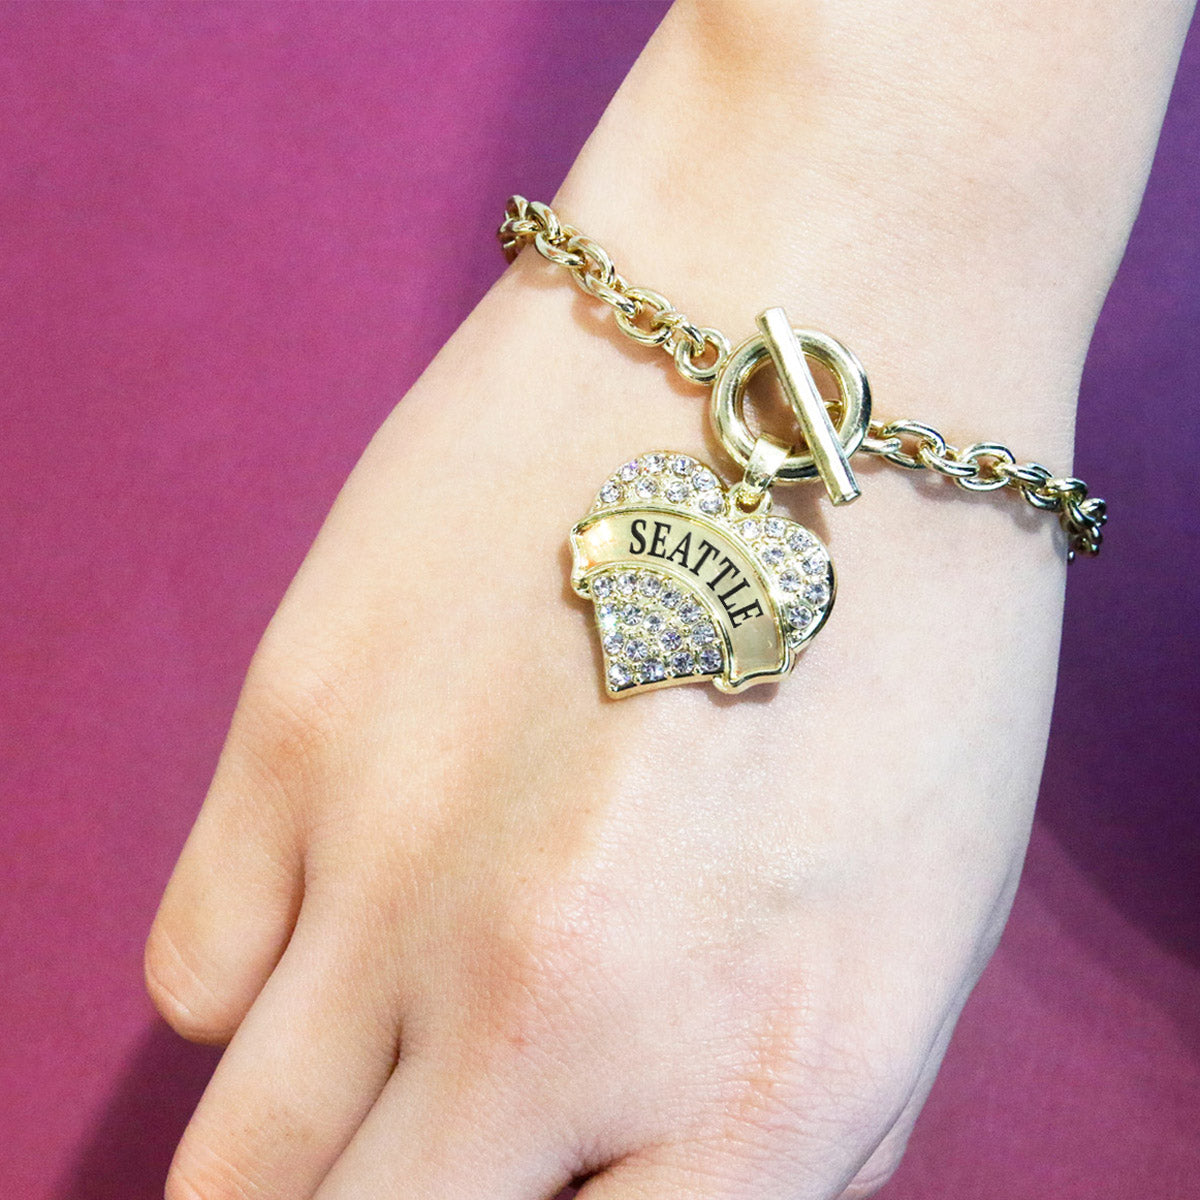 Gold Seattle Pave Heart Charm Toggle Bracelet